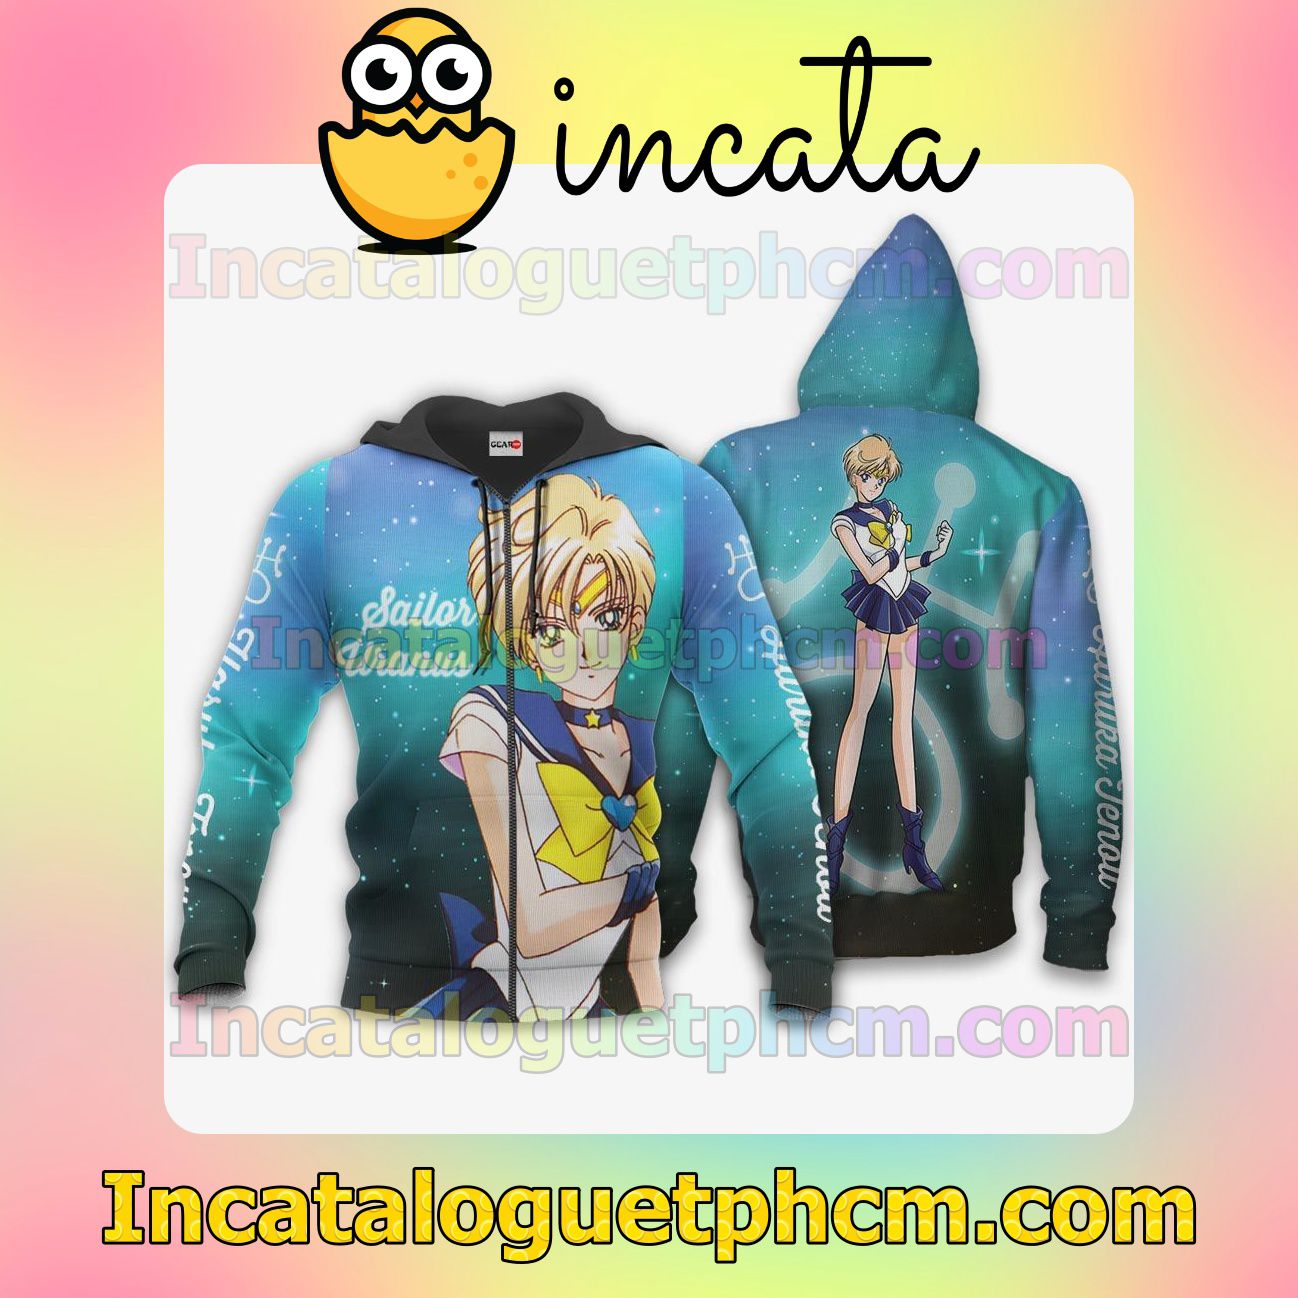 Sailor Uranus Haruka Tenoh Sailor Moon Anime Clothing Merch Zip Hoodie Jacket Shirts